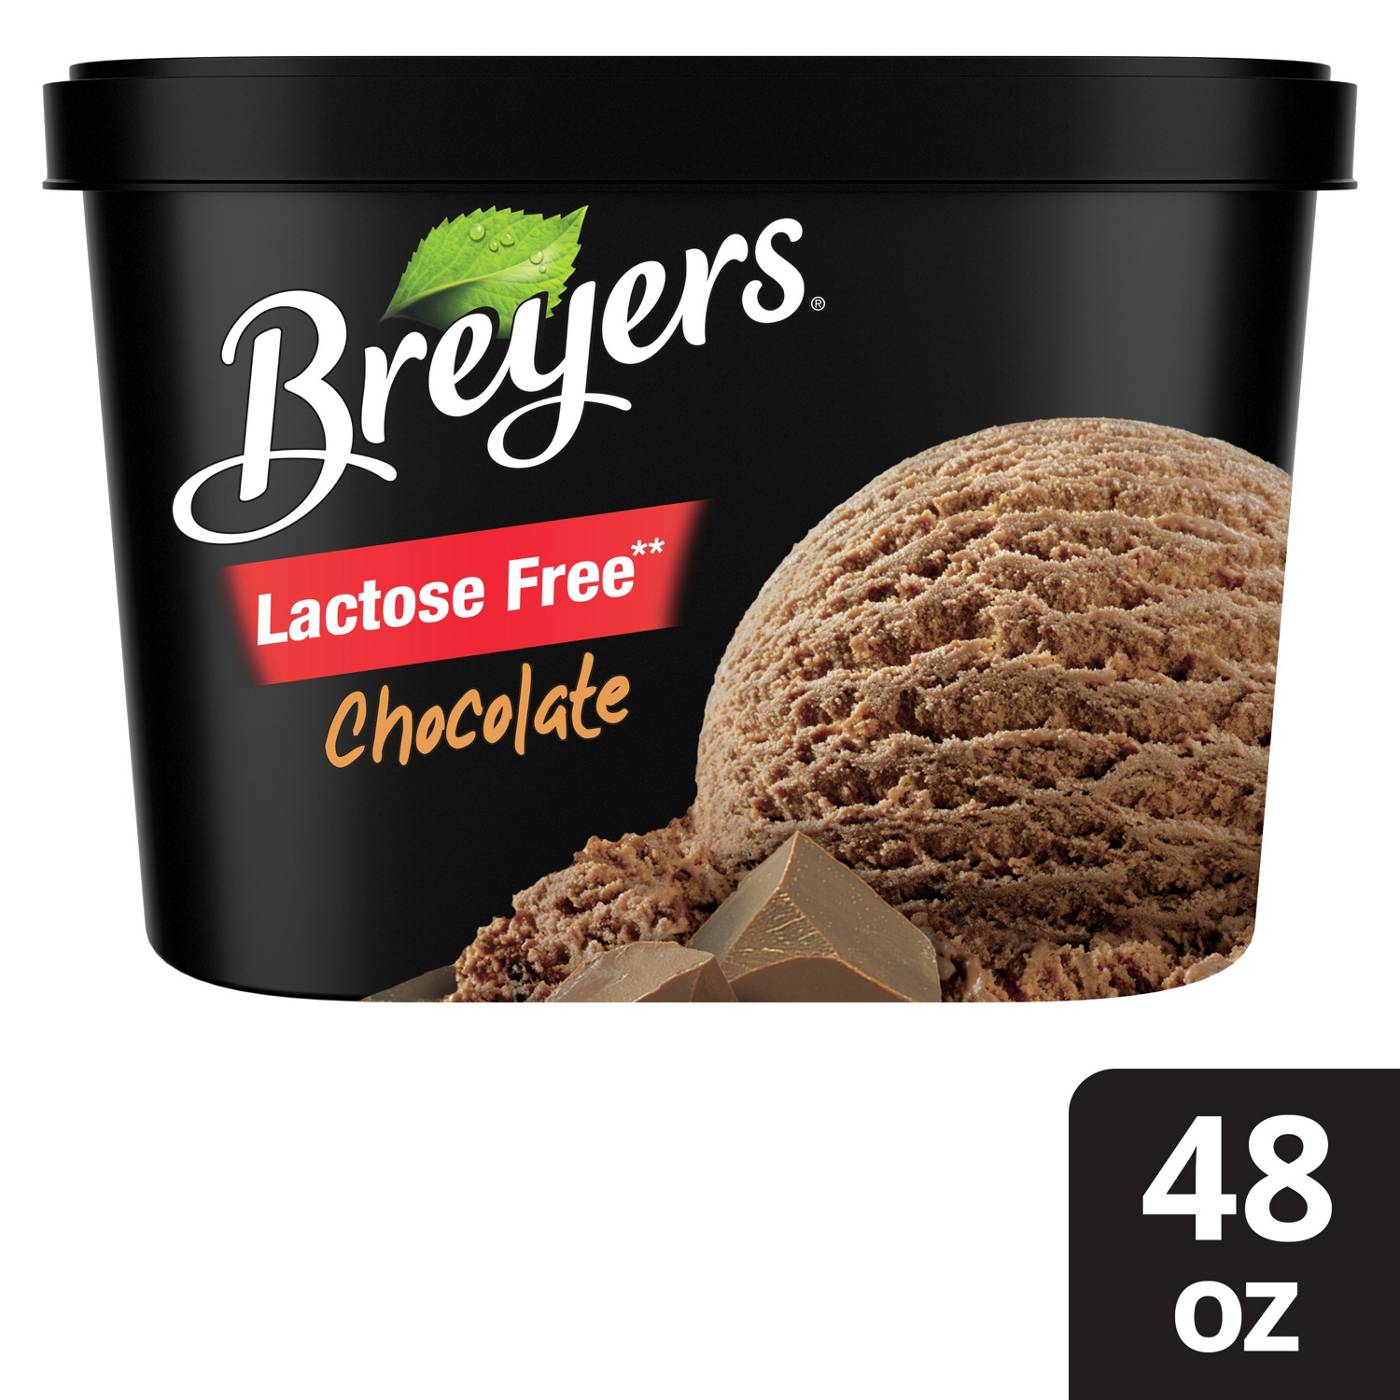 Breyers Lactose Free Chocolate Light Ice Cream; image 5 of 5